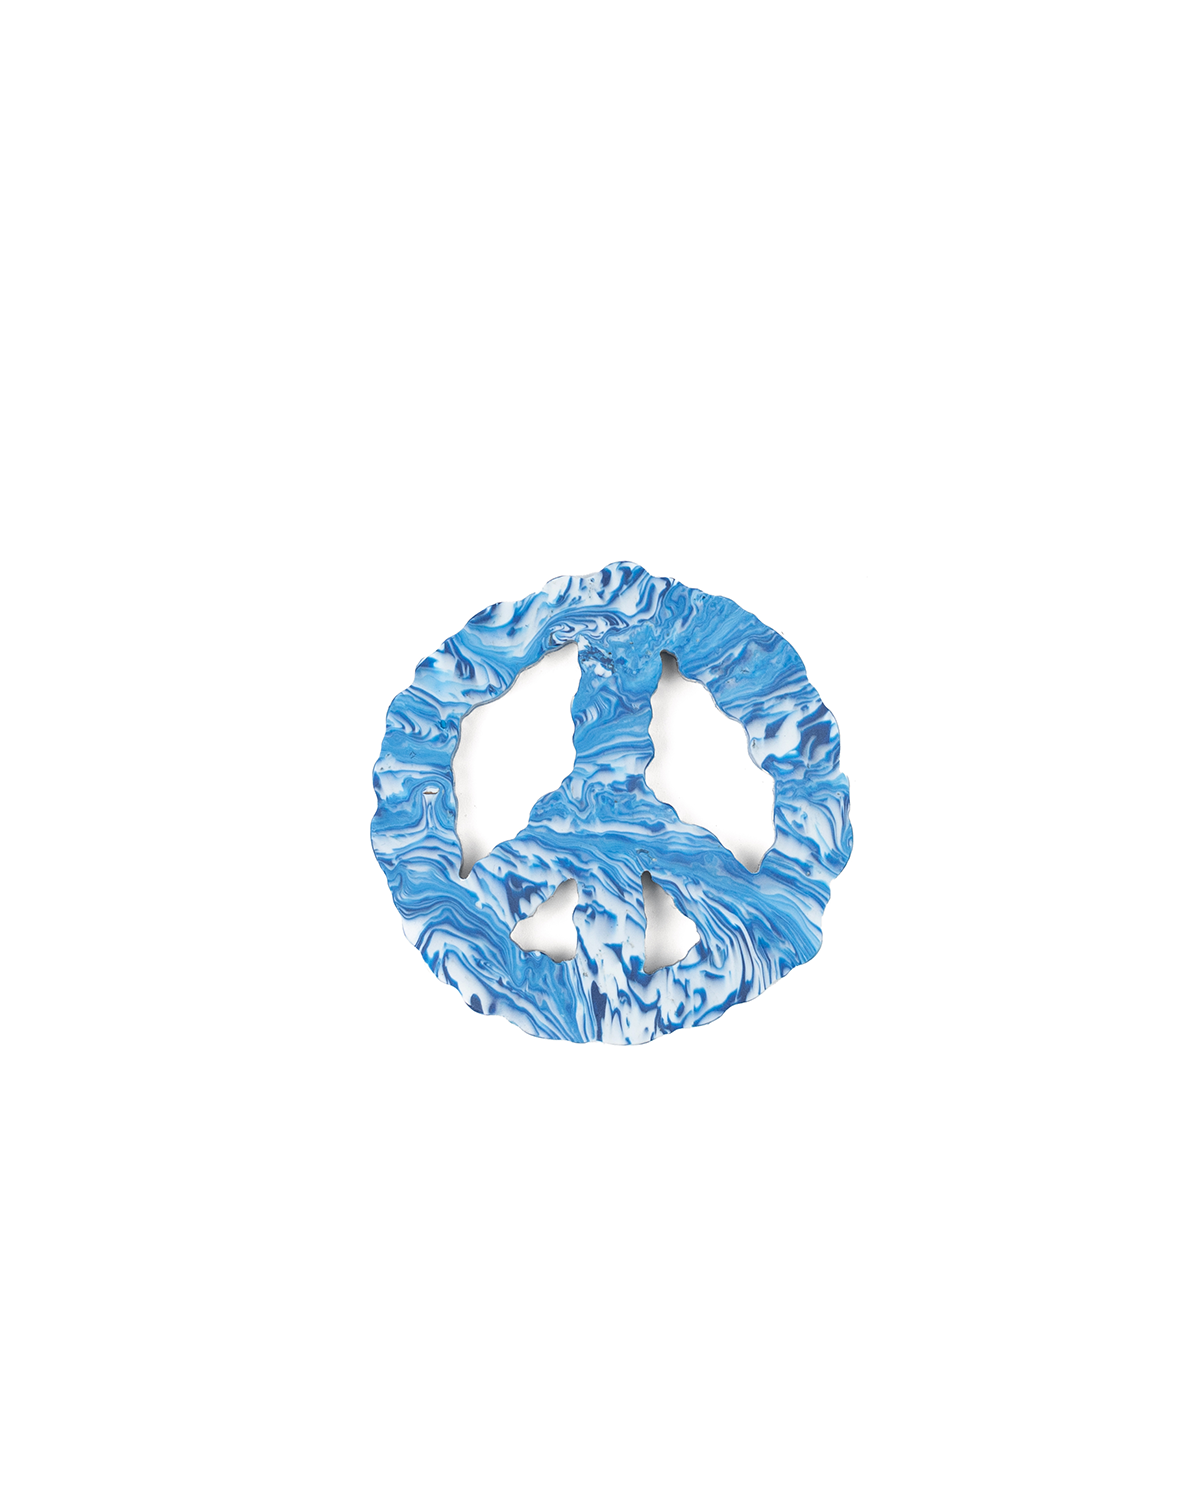 Clouded Peace Coaster (Set of 4) 'Blue'